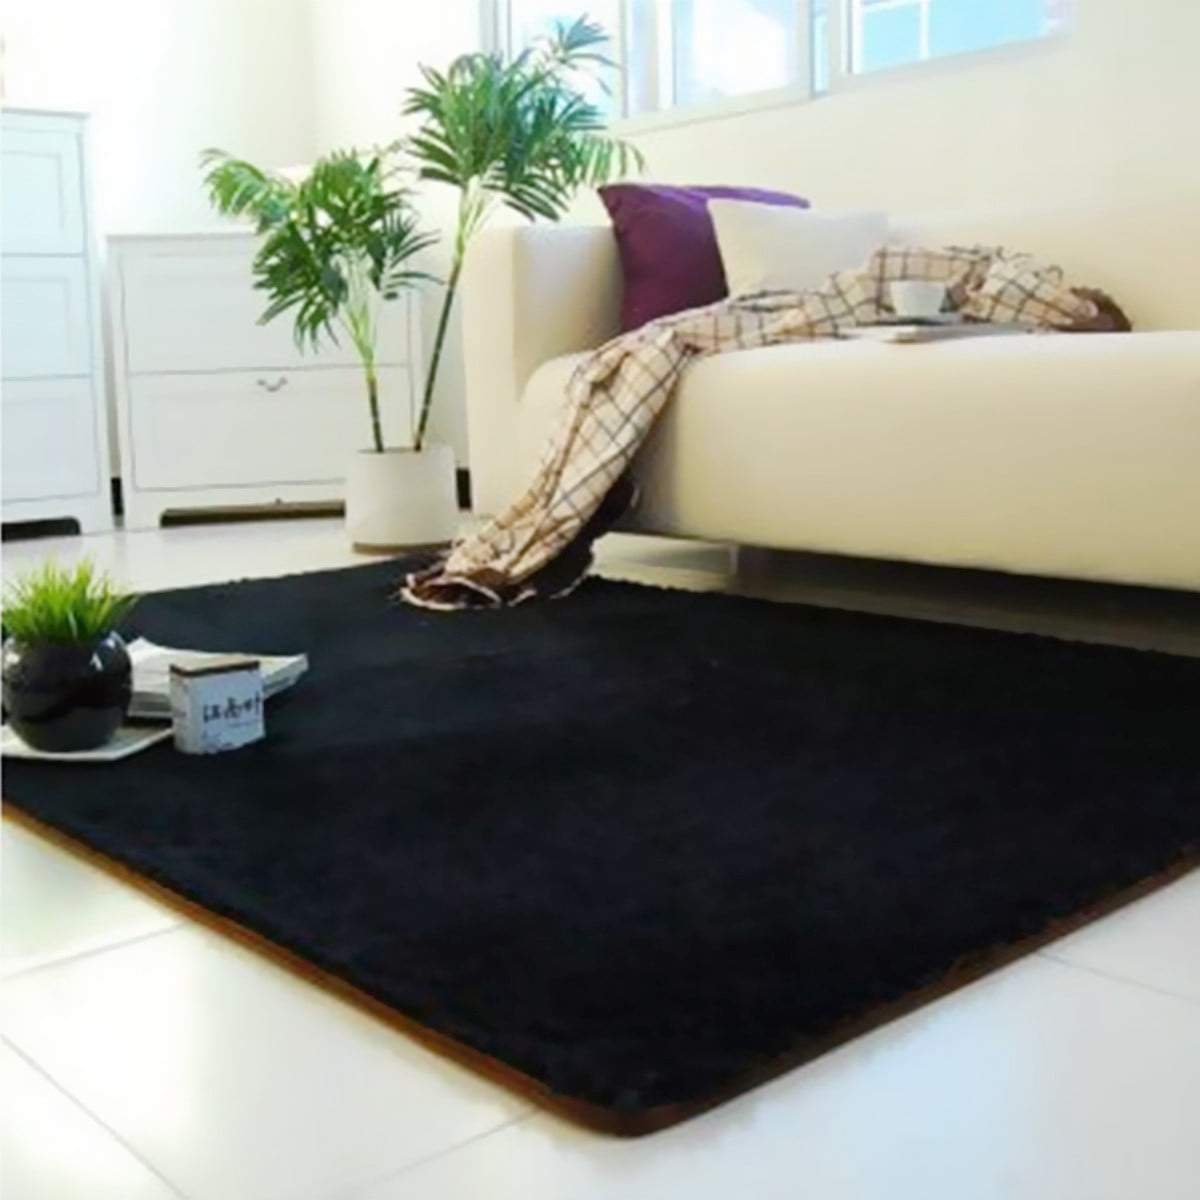 120x80cm Fluffy Rugs Anti-Skid Shaggy Area Rug Home Carpet Floor Mat Kid Playmat 